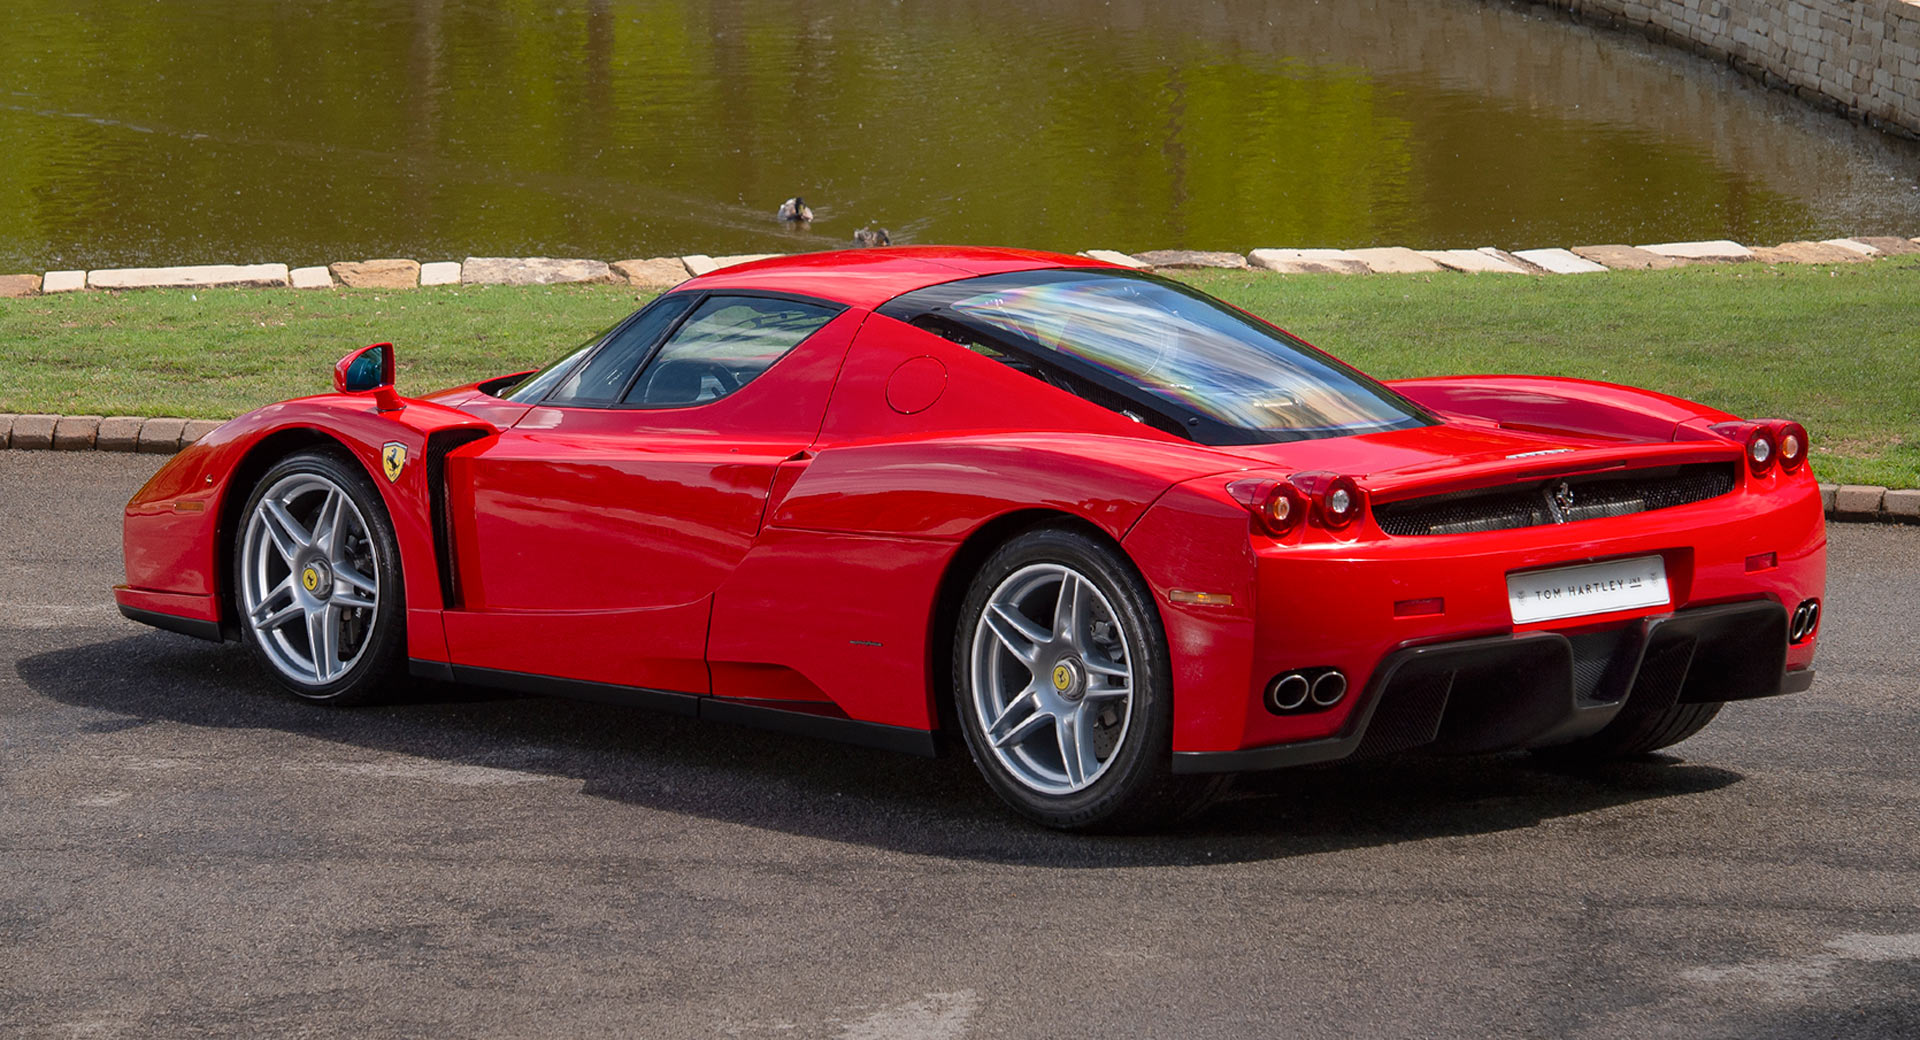 Ferrari New Model 2020 Price